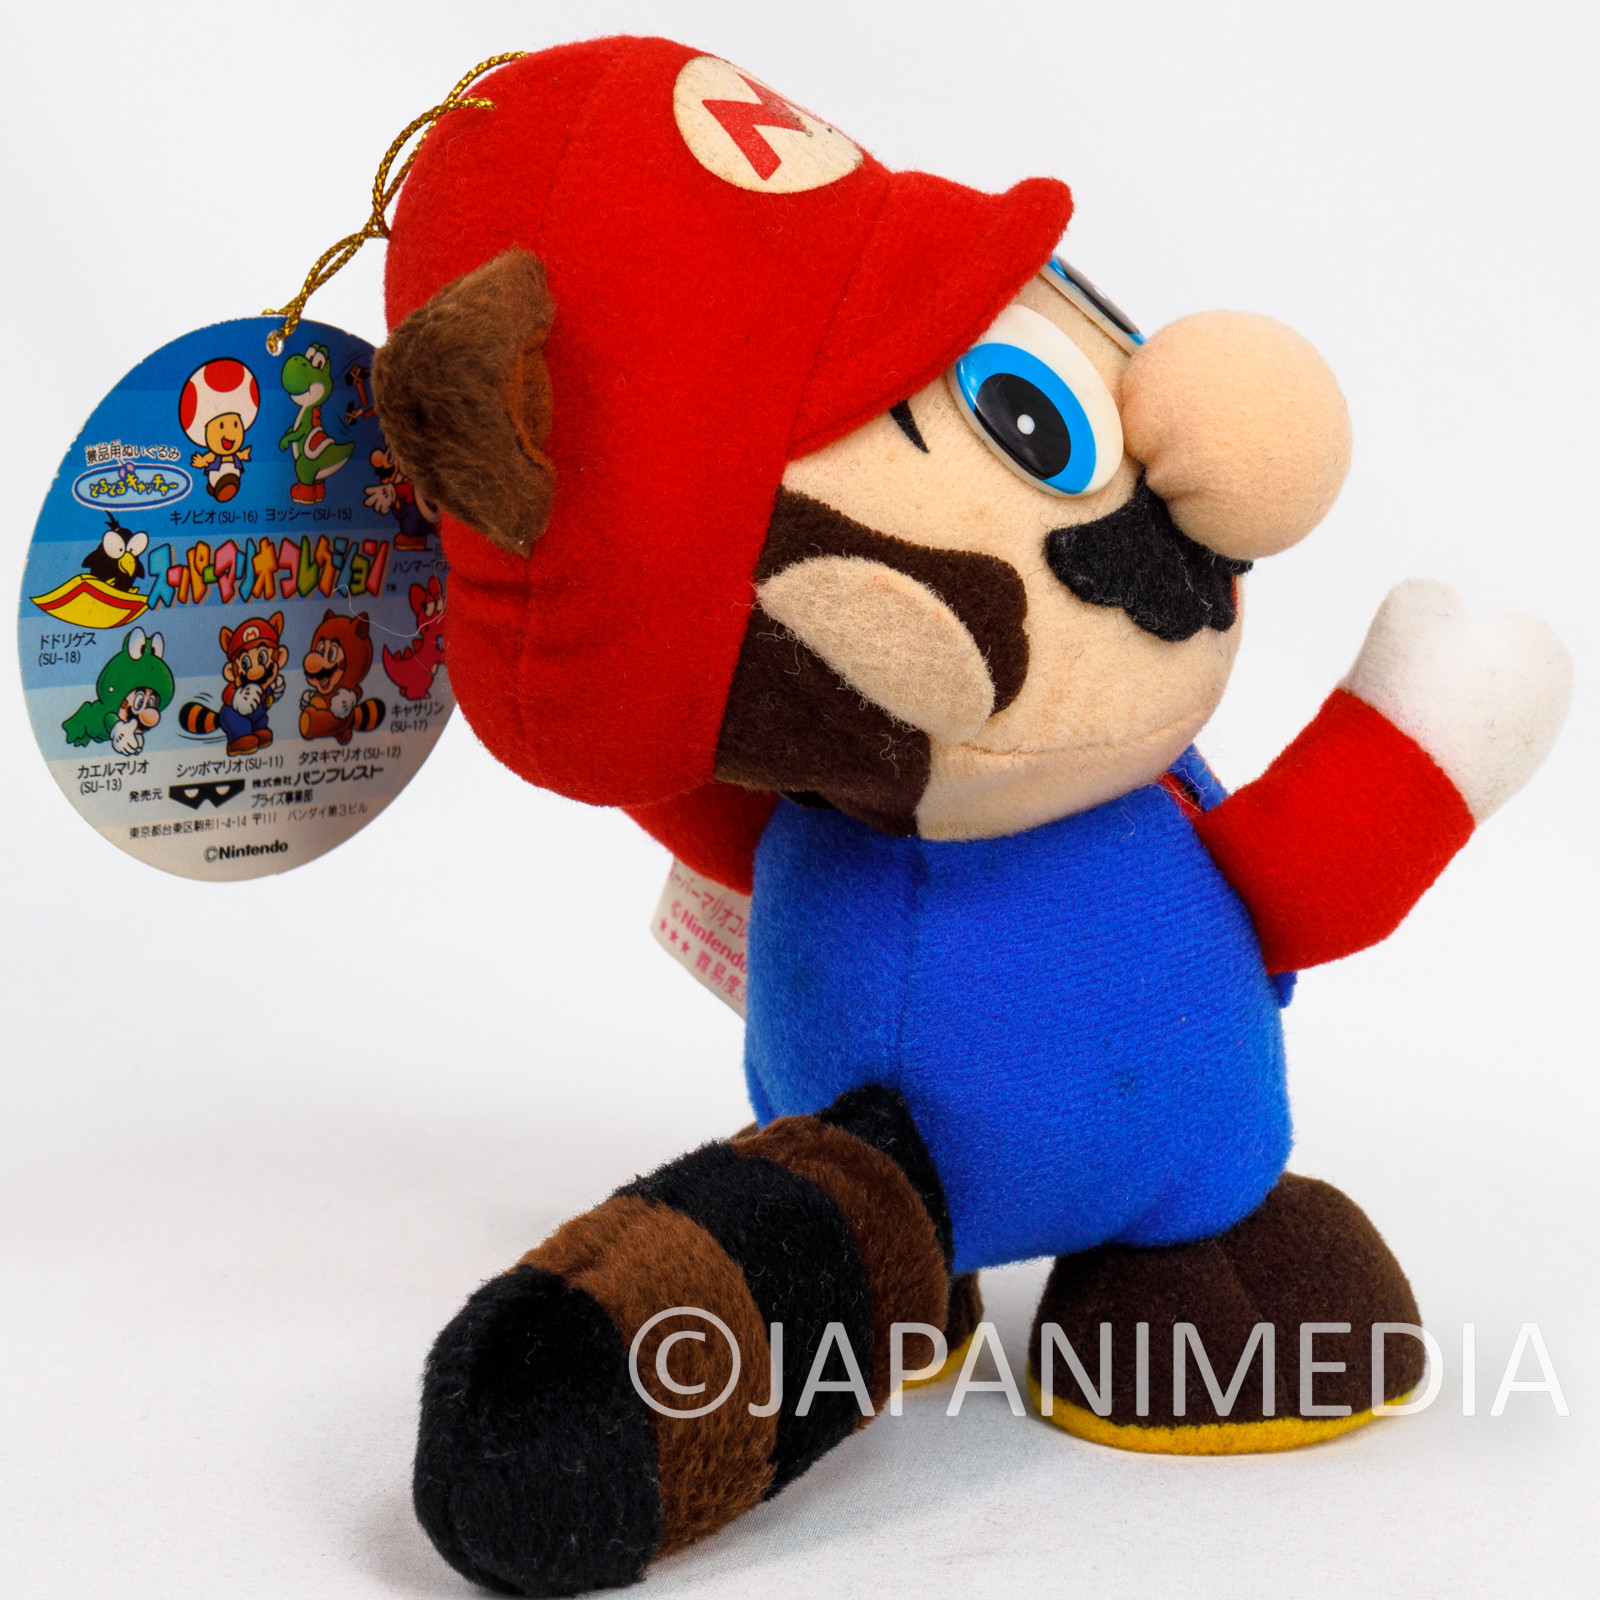 Retro Super Mario Racoon Mario Plush Doll Banpresto Nintendo Famicom SNES